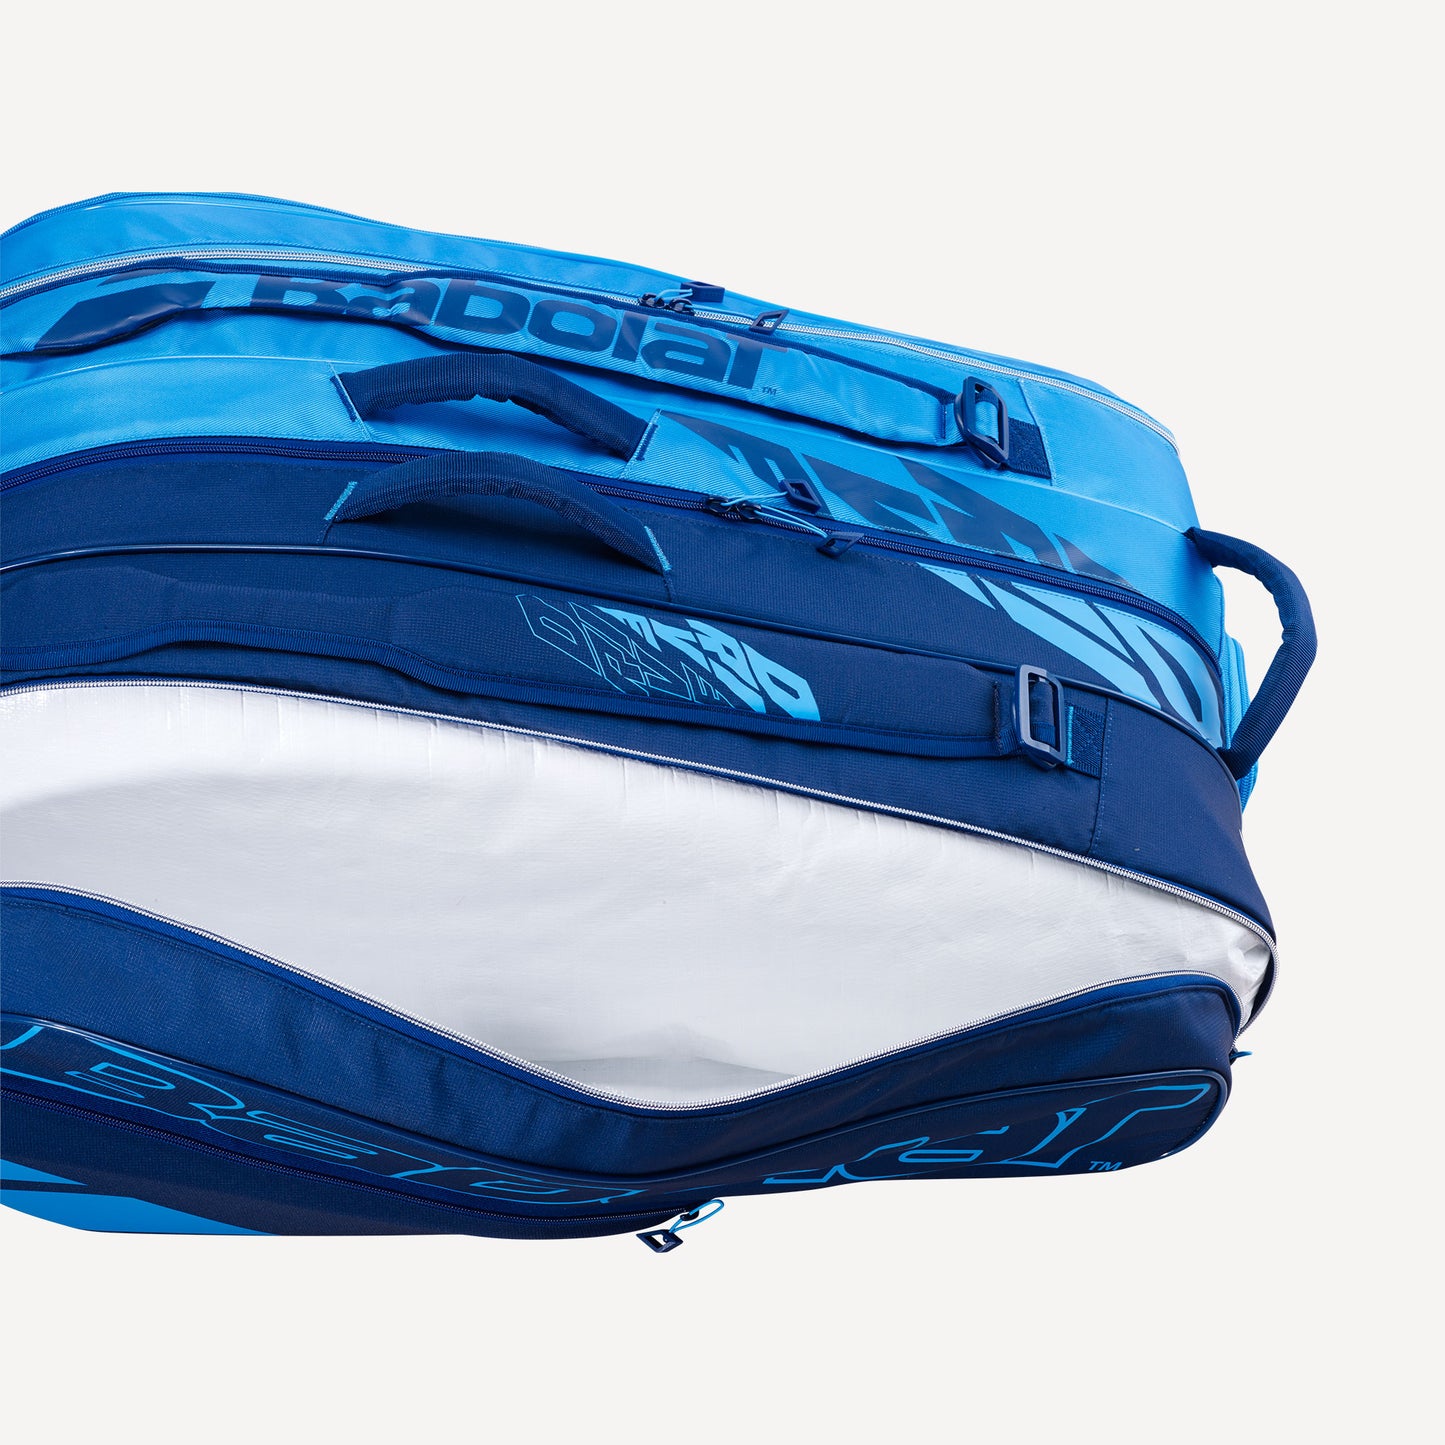 Babolat Pure Drive RH X12 Tennis Bag Blue (4)